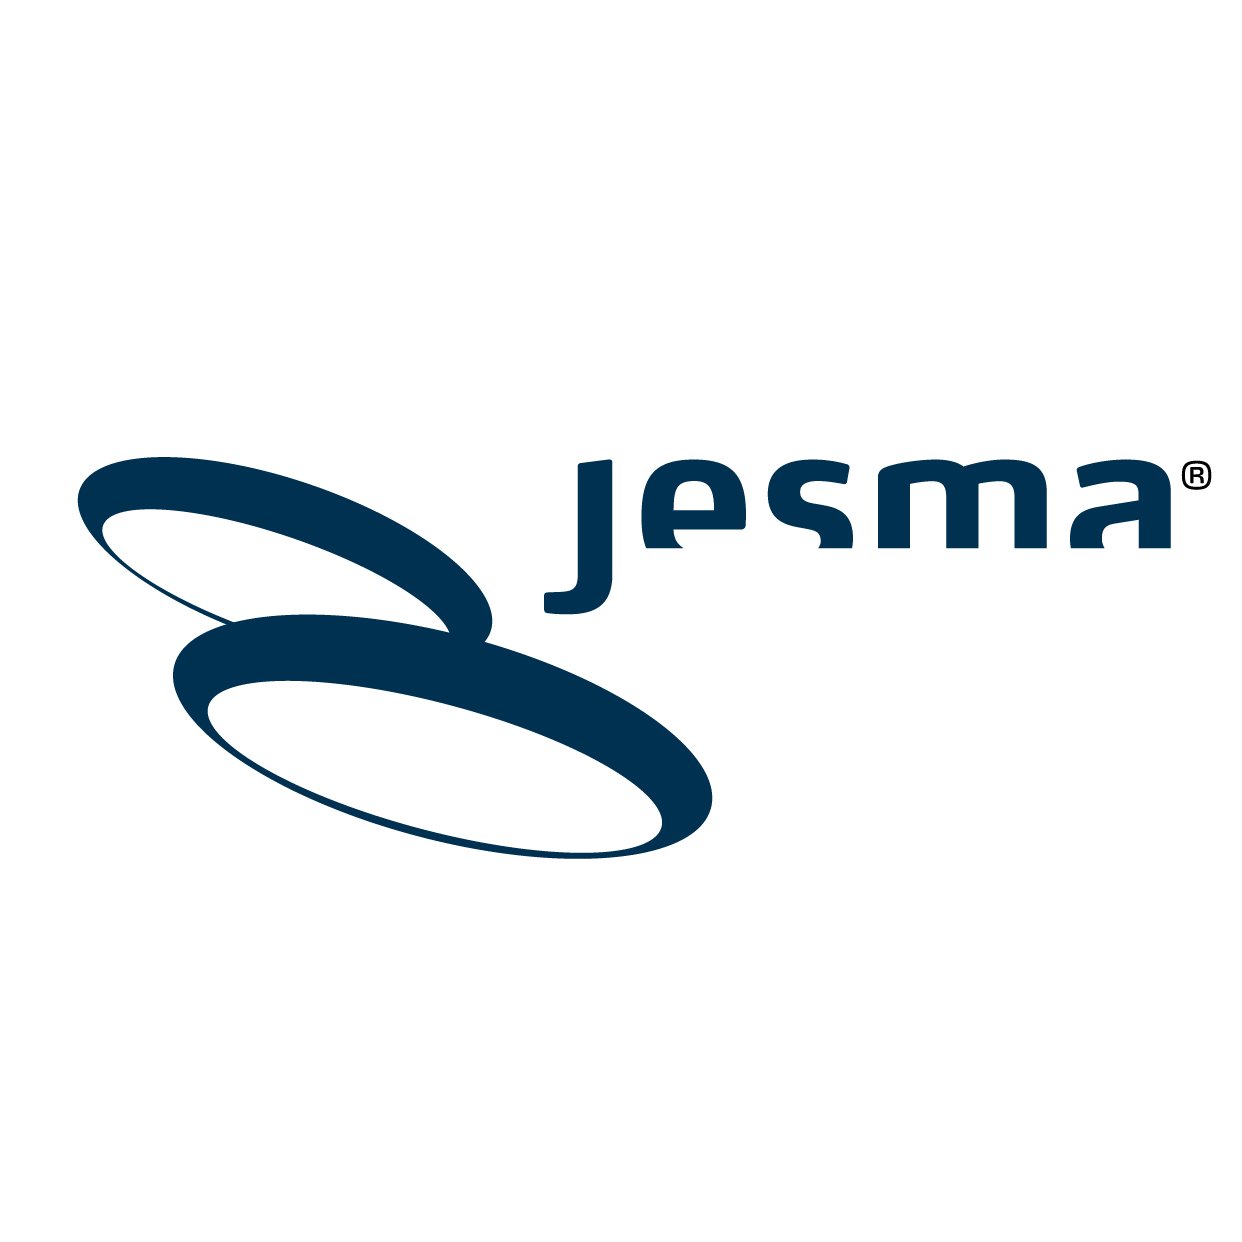 New Exclusive Partnership - Jesma